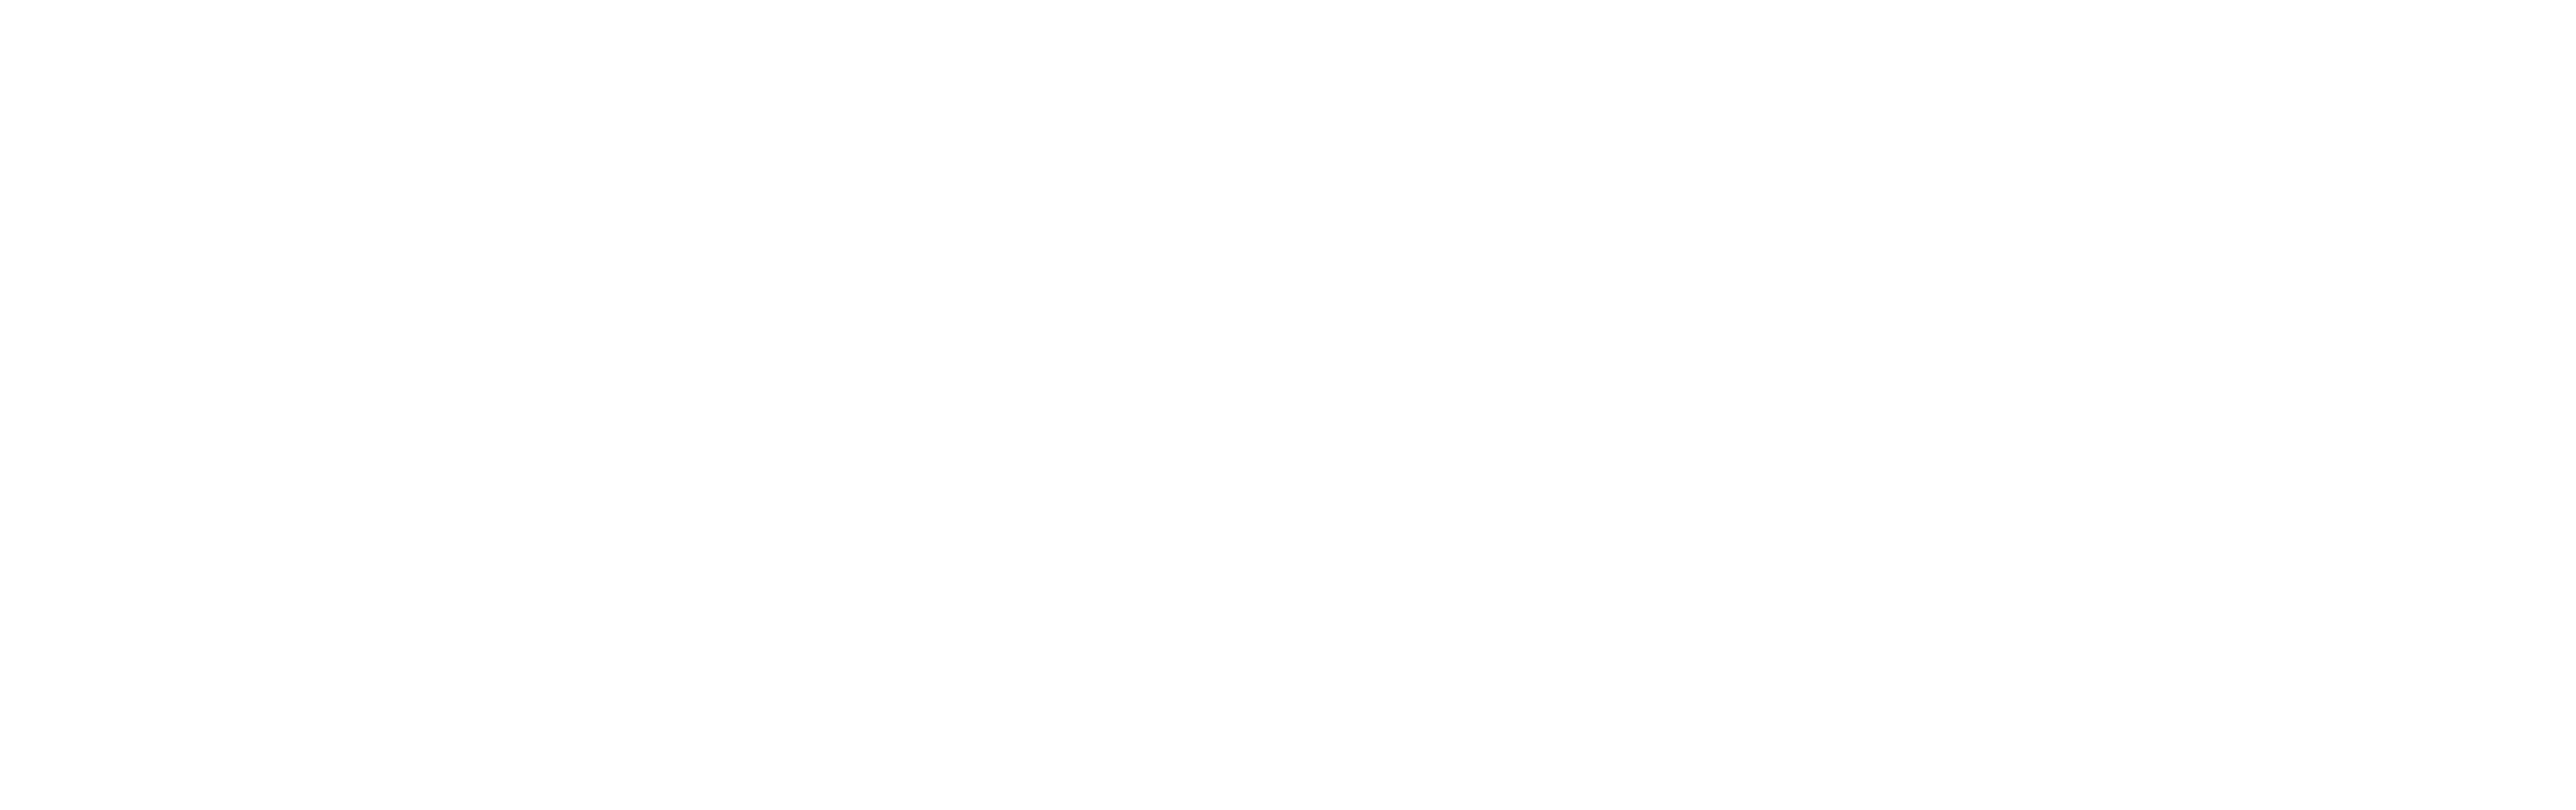 Ecofonds-Gestion-Actifs-Logo-FR-72dpi-BLANC-PNG